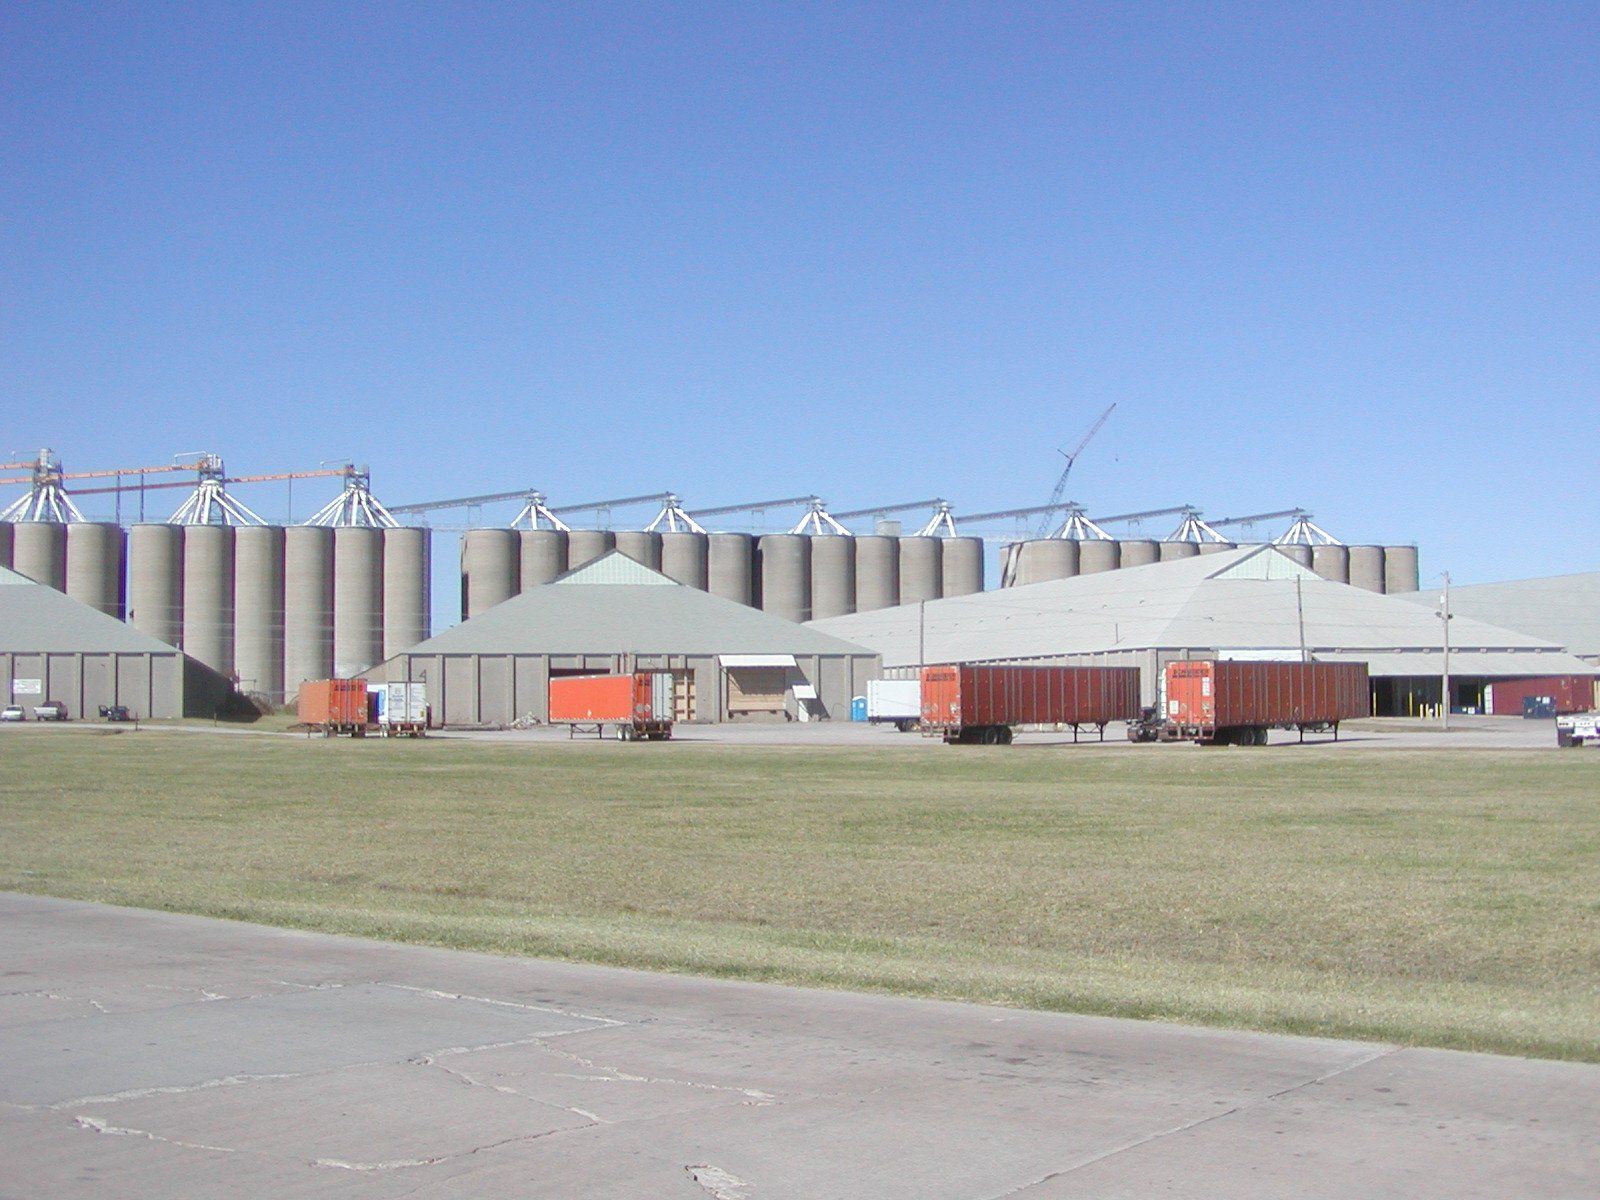 Grain — Far View of Grain Facilities in Cedar Rapids, IA